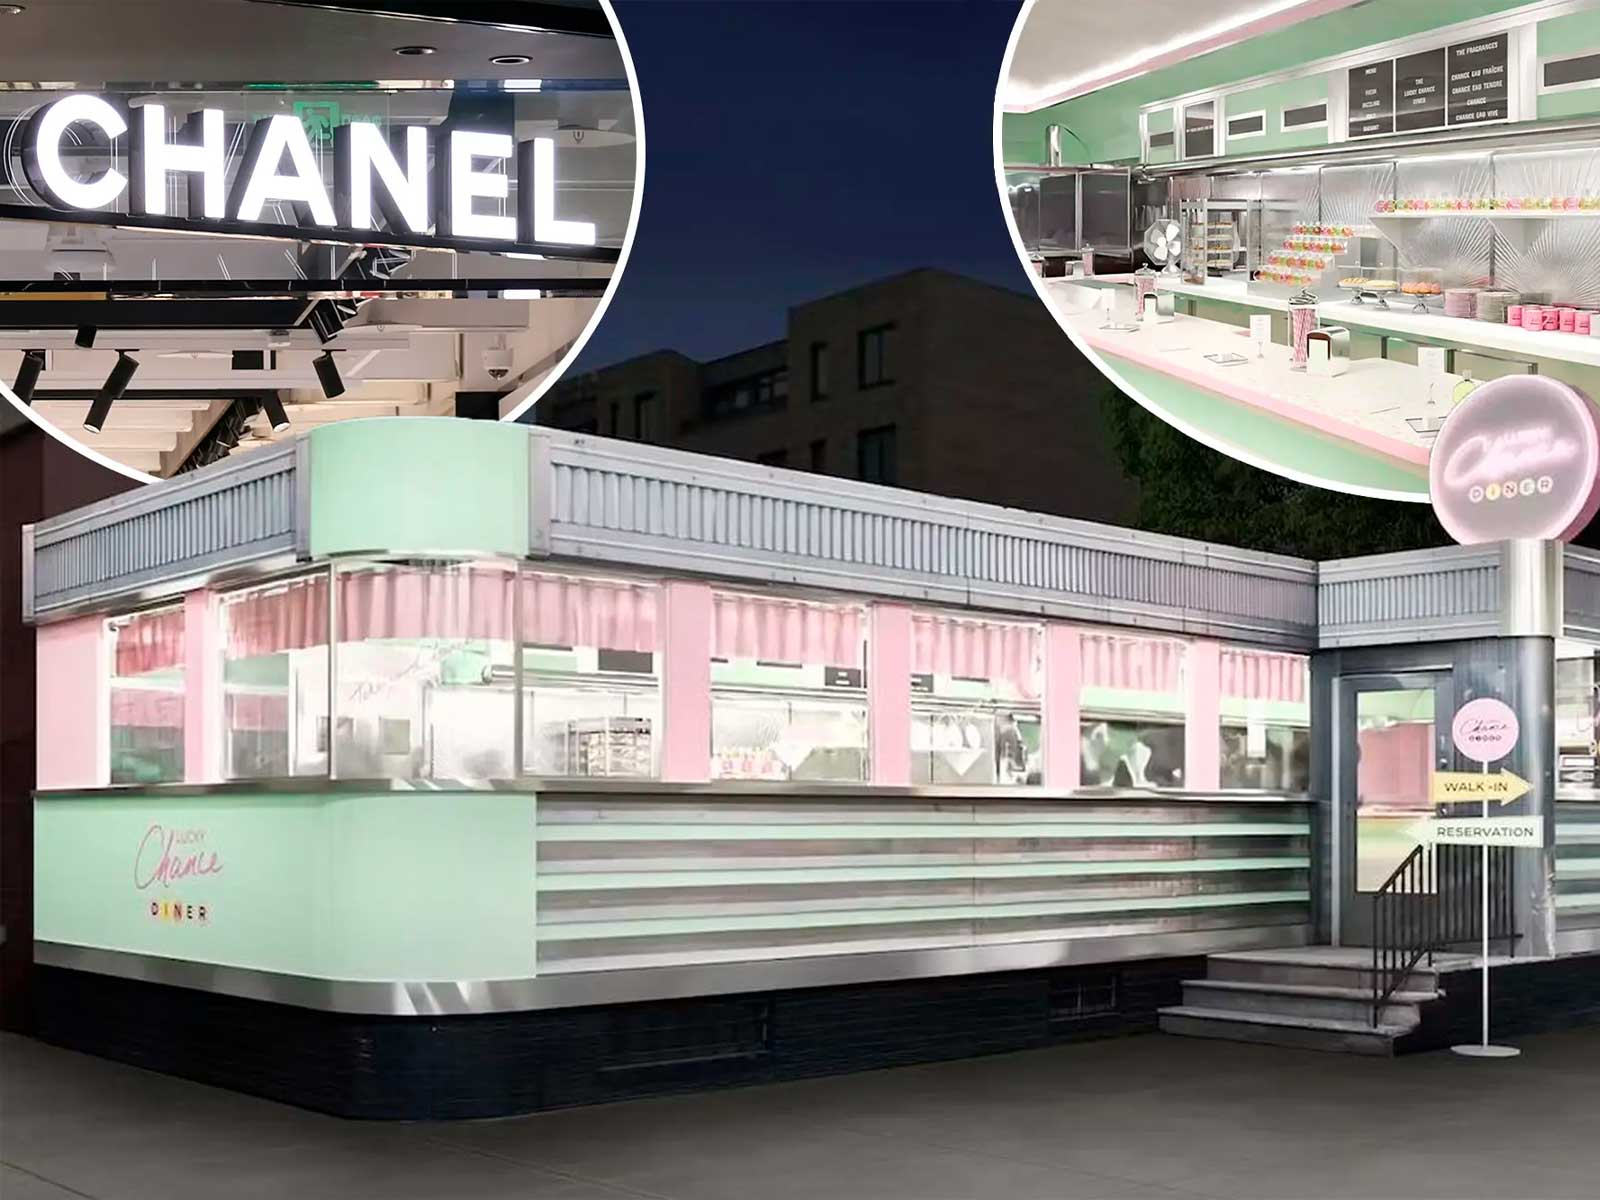 Lucky Chance Diner: Chanel's new retro restaurant - HIGHXTAR.